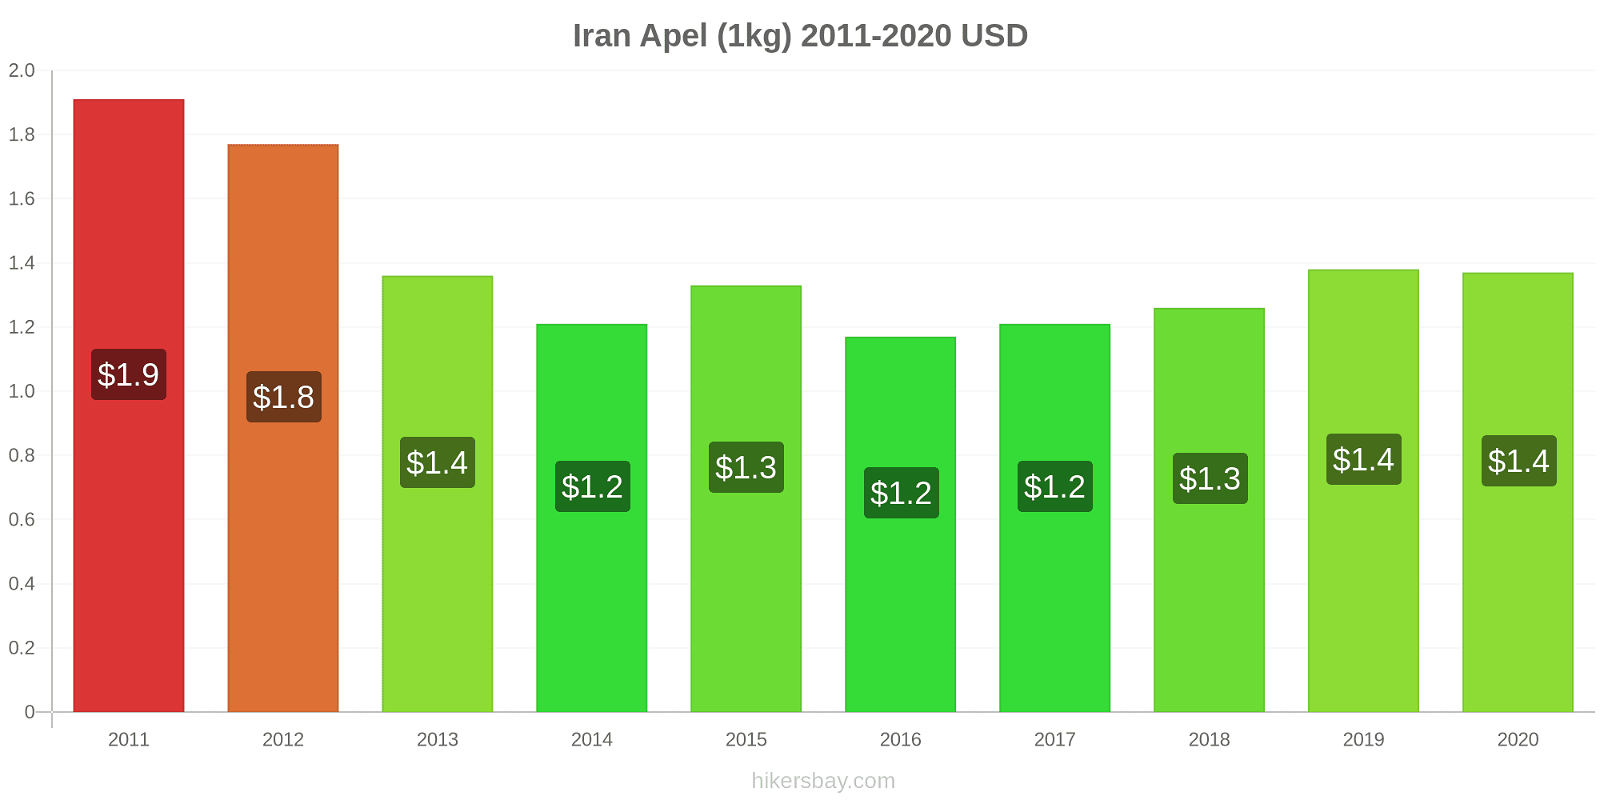 Iran perubahan harga Apel (1kg) hikersbay.com